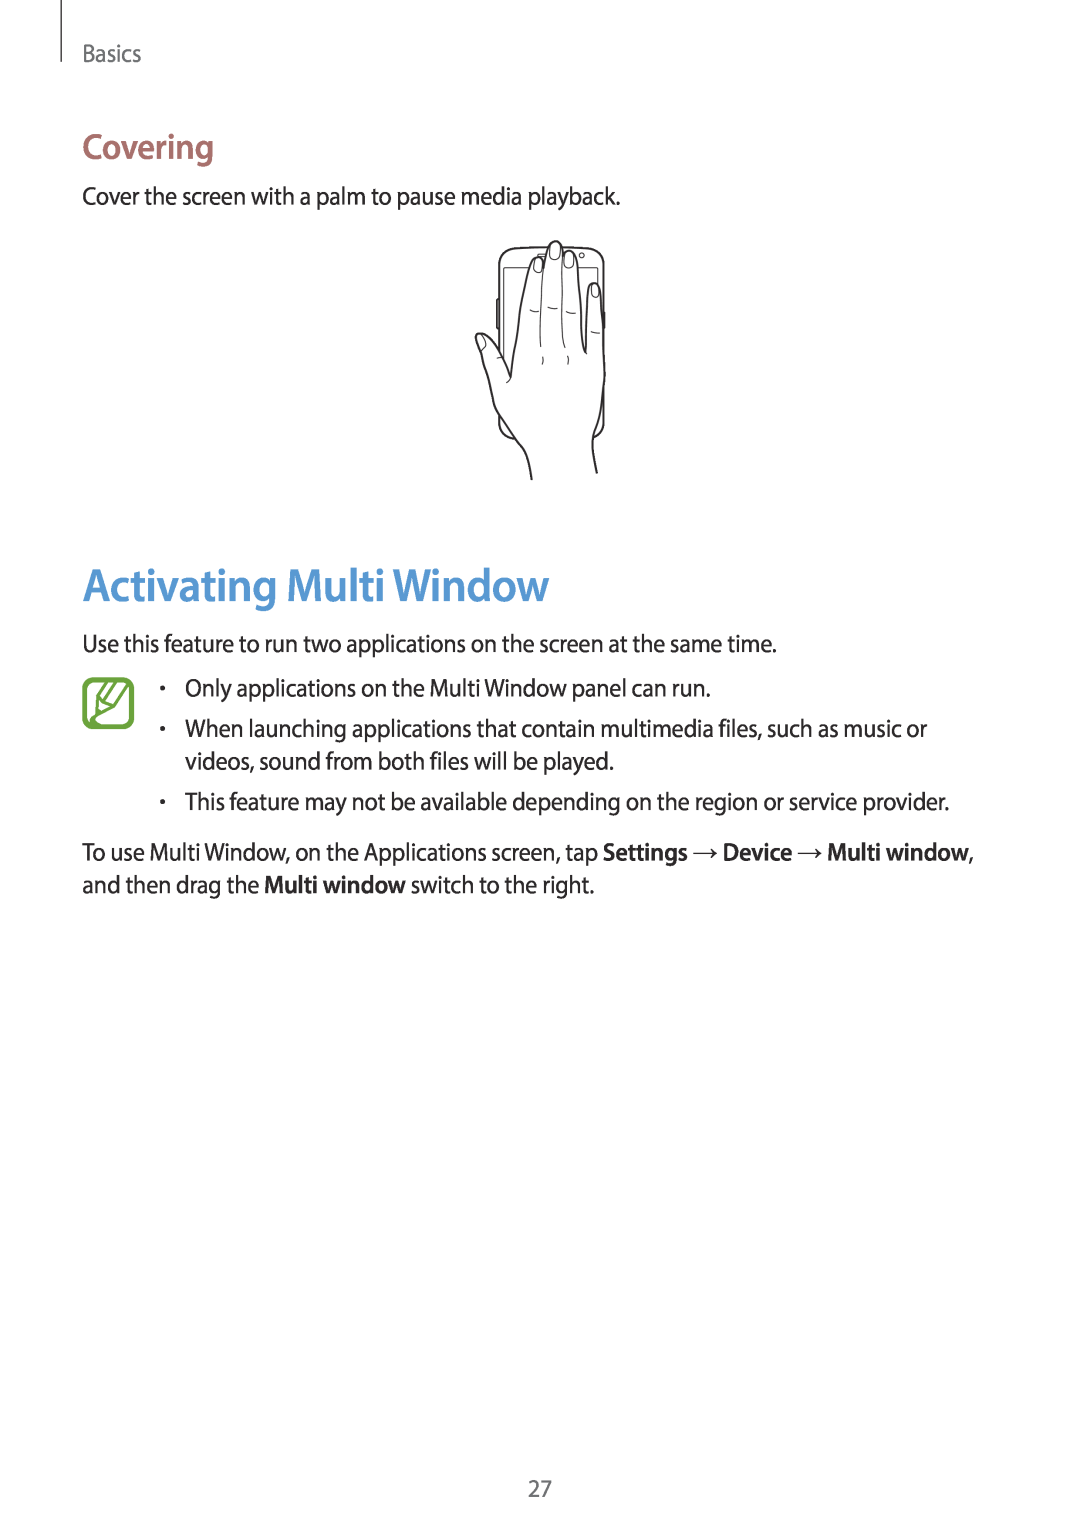 Samsung SM-G7105ZWAXSG, SM-G7105ZKAATO, SM-G7105ZWAATO, SM-G7105ZKATUR manual Activating Multi Window, Covering, Basics 